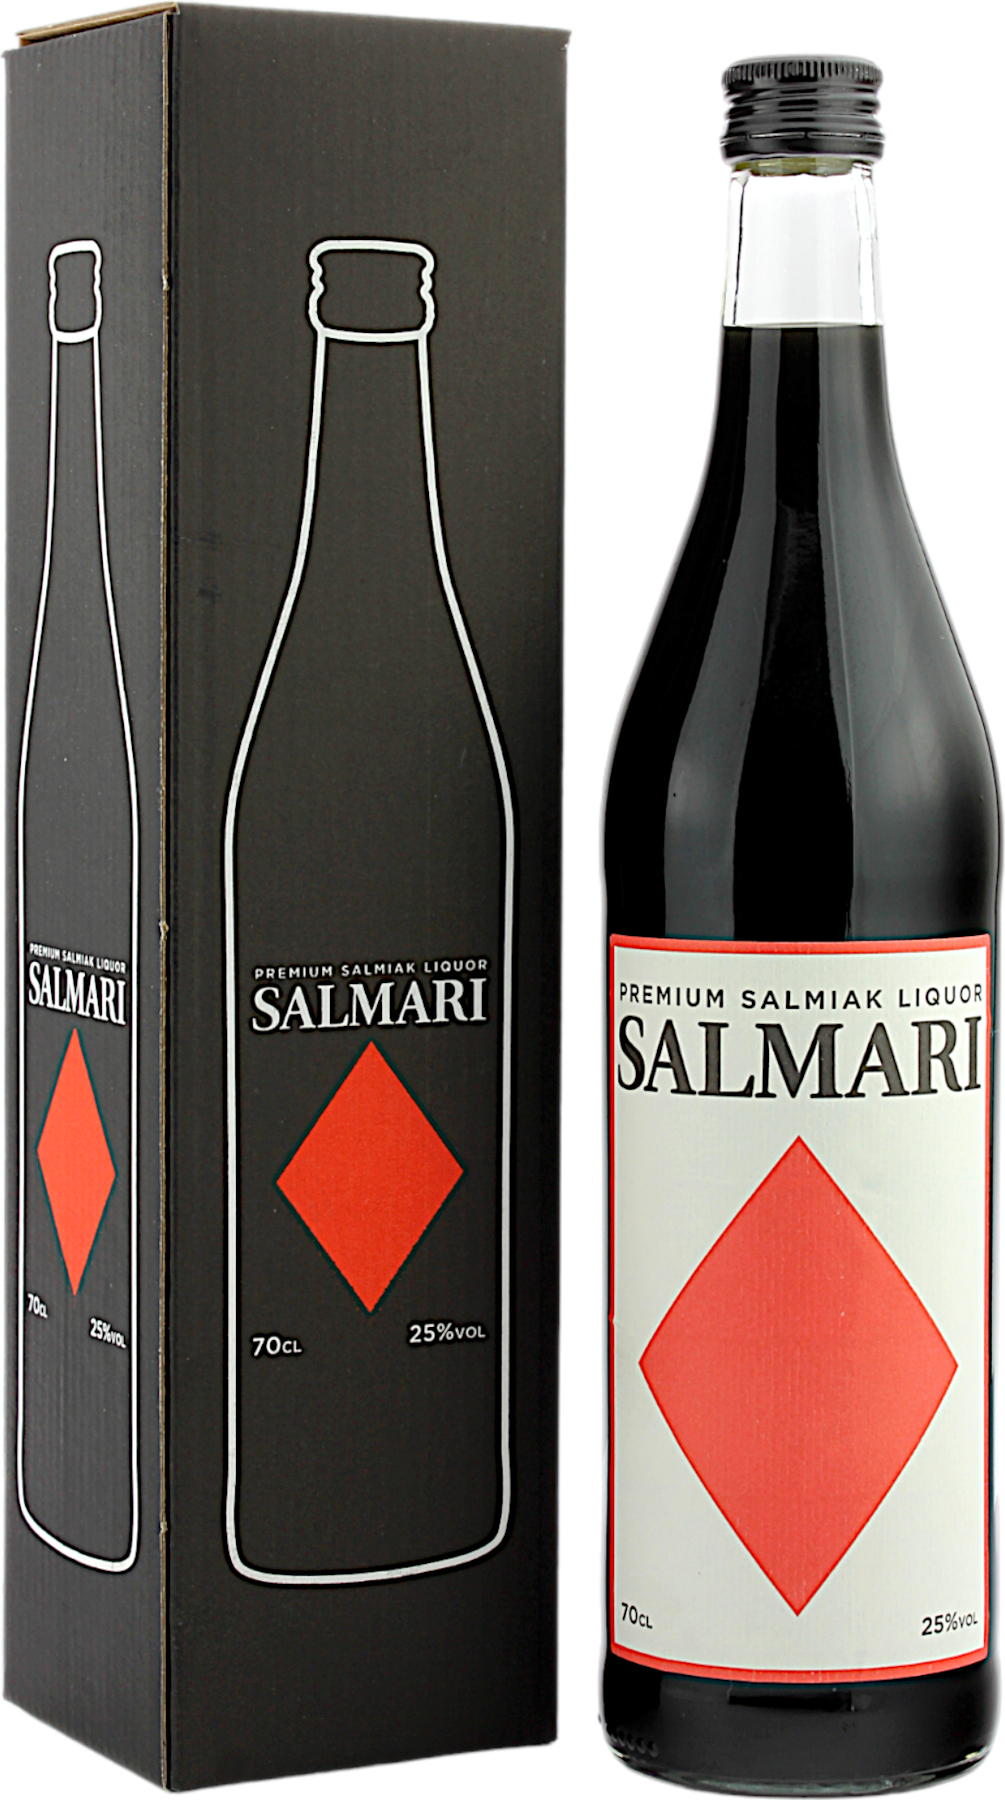 Salmari Premium Salmiak Lakritz Likör 25.0% 0,7l